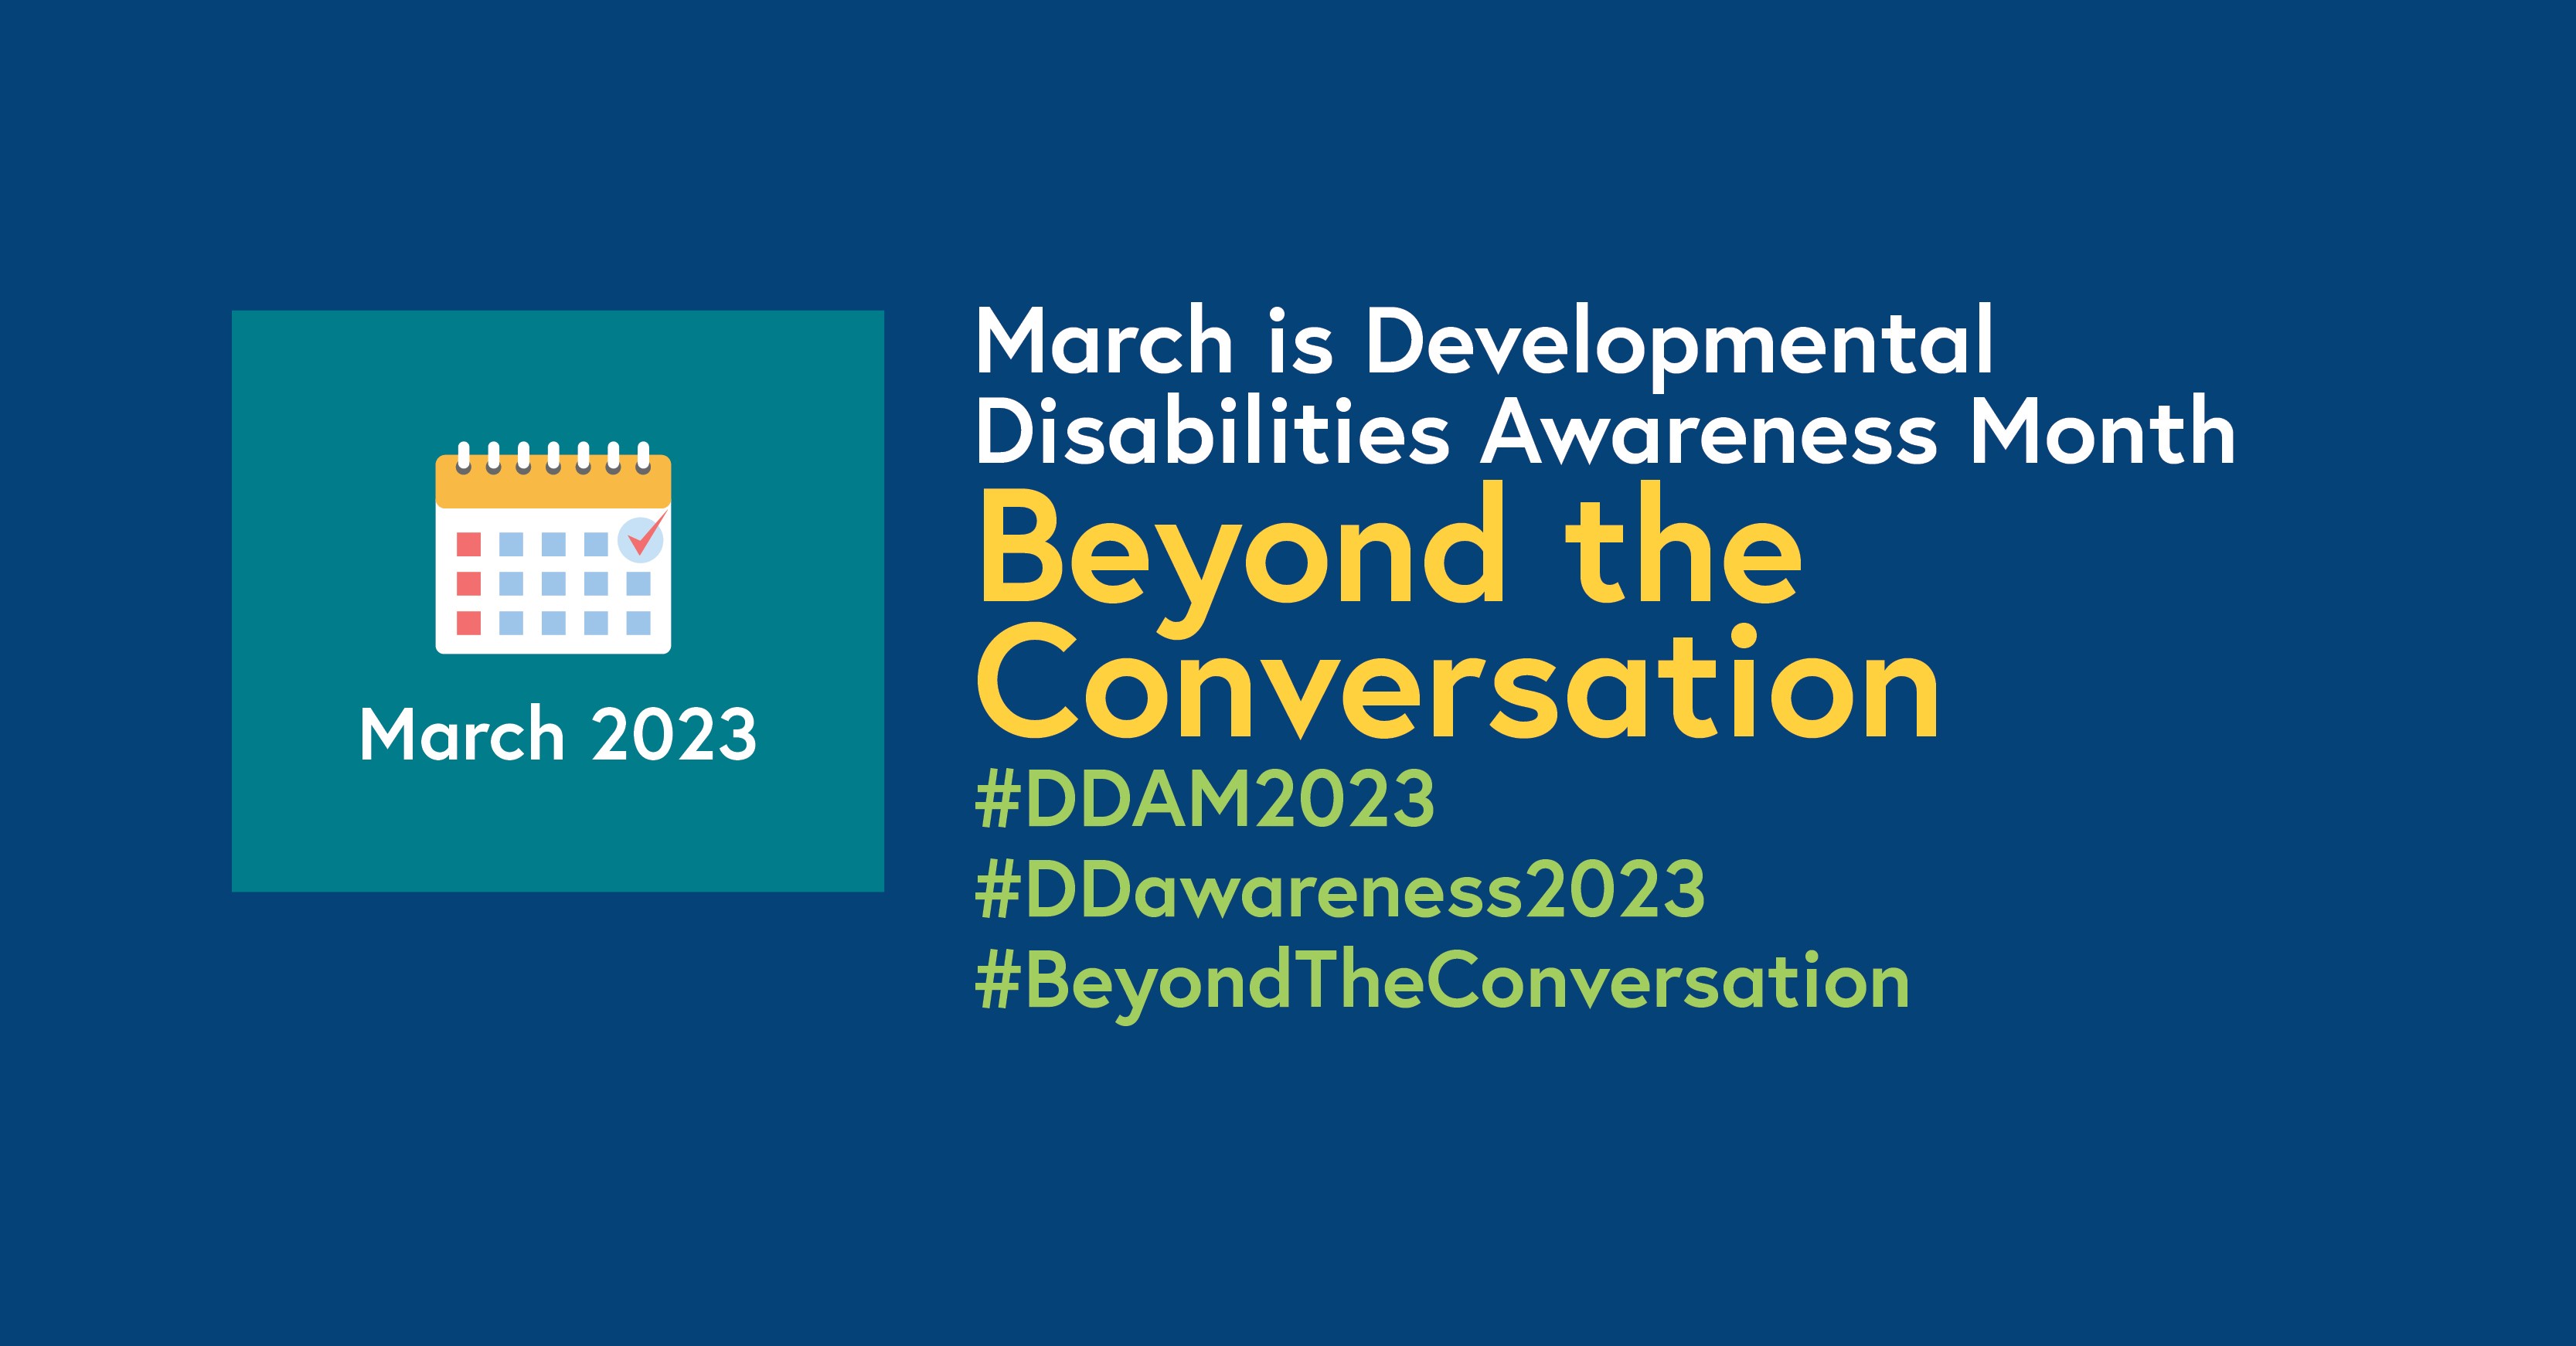 March is Developmental Disabilities Awareness Month. Beyond the conversation. #DDAM2023, #DDAwareness2023, #BeyondTheConversation